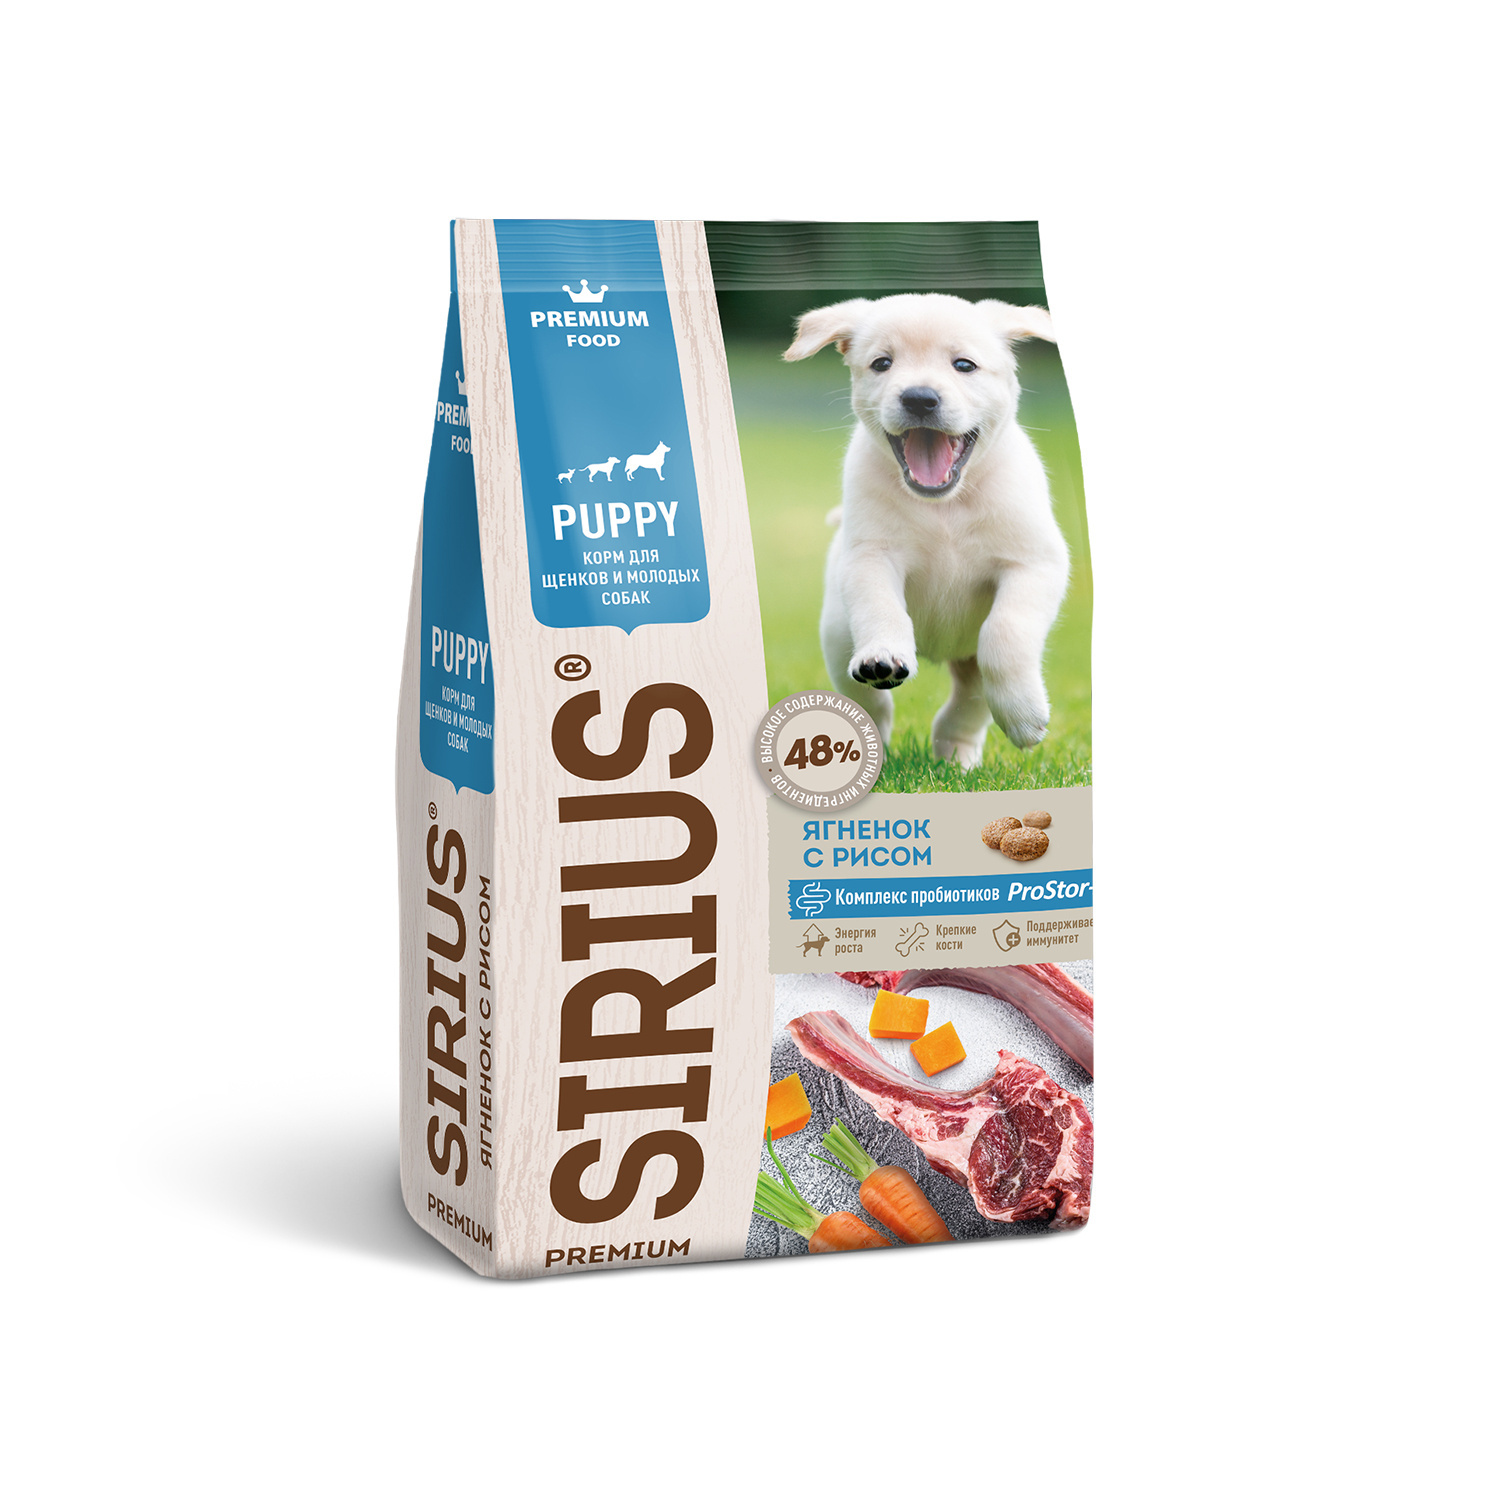 Sirius Sirius сухой корм для щенков и молодых собак, ягненок с рисом (2 кг)